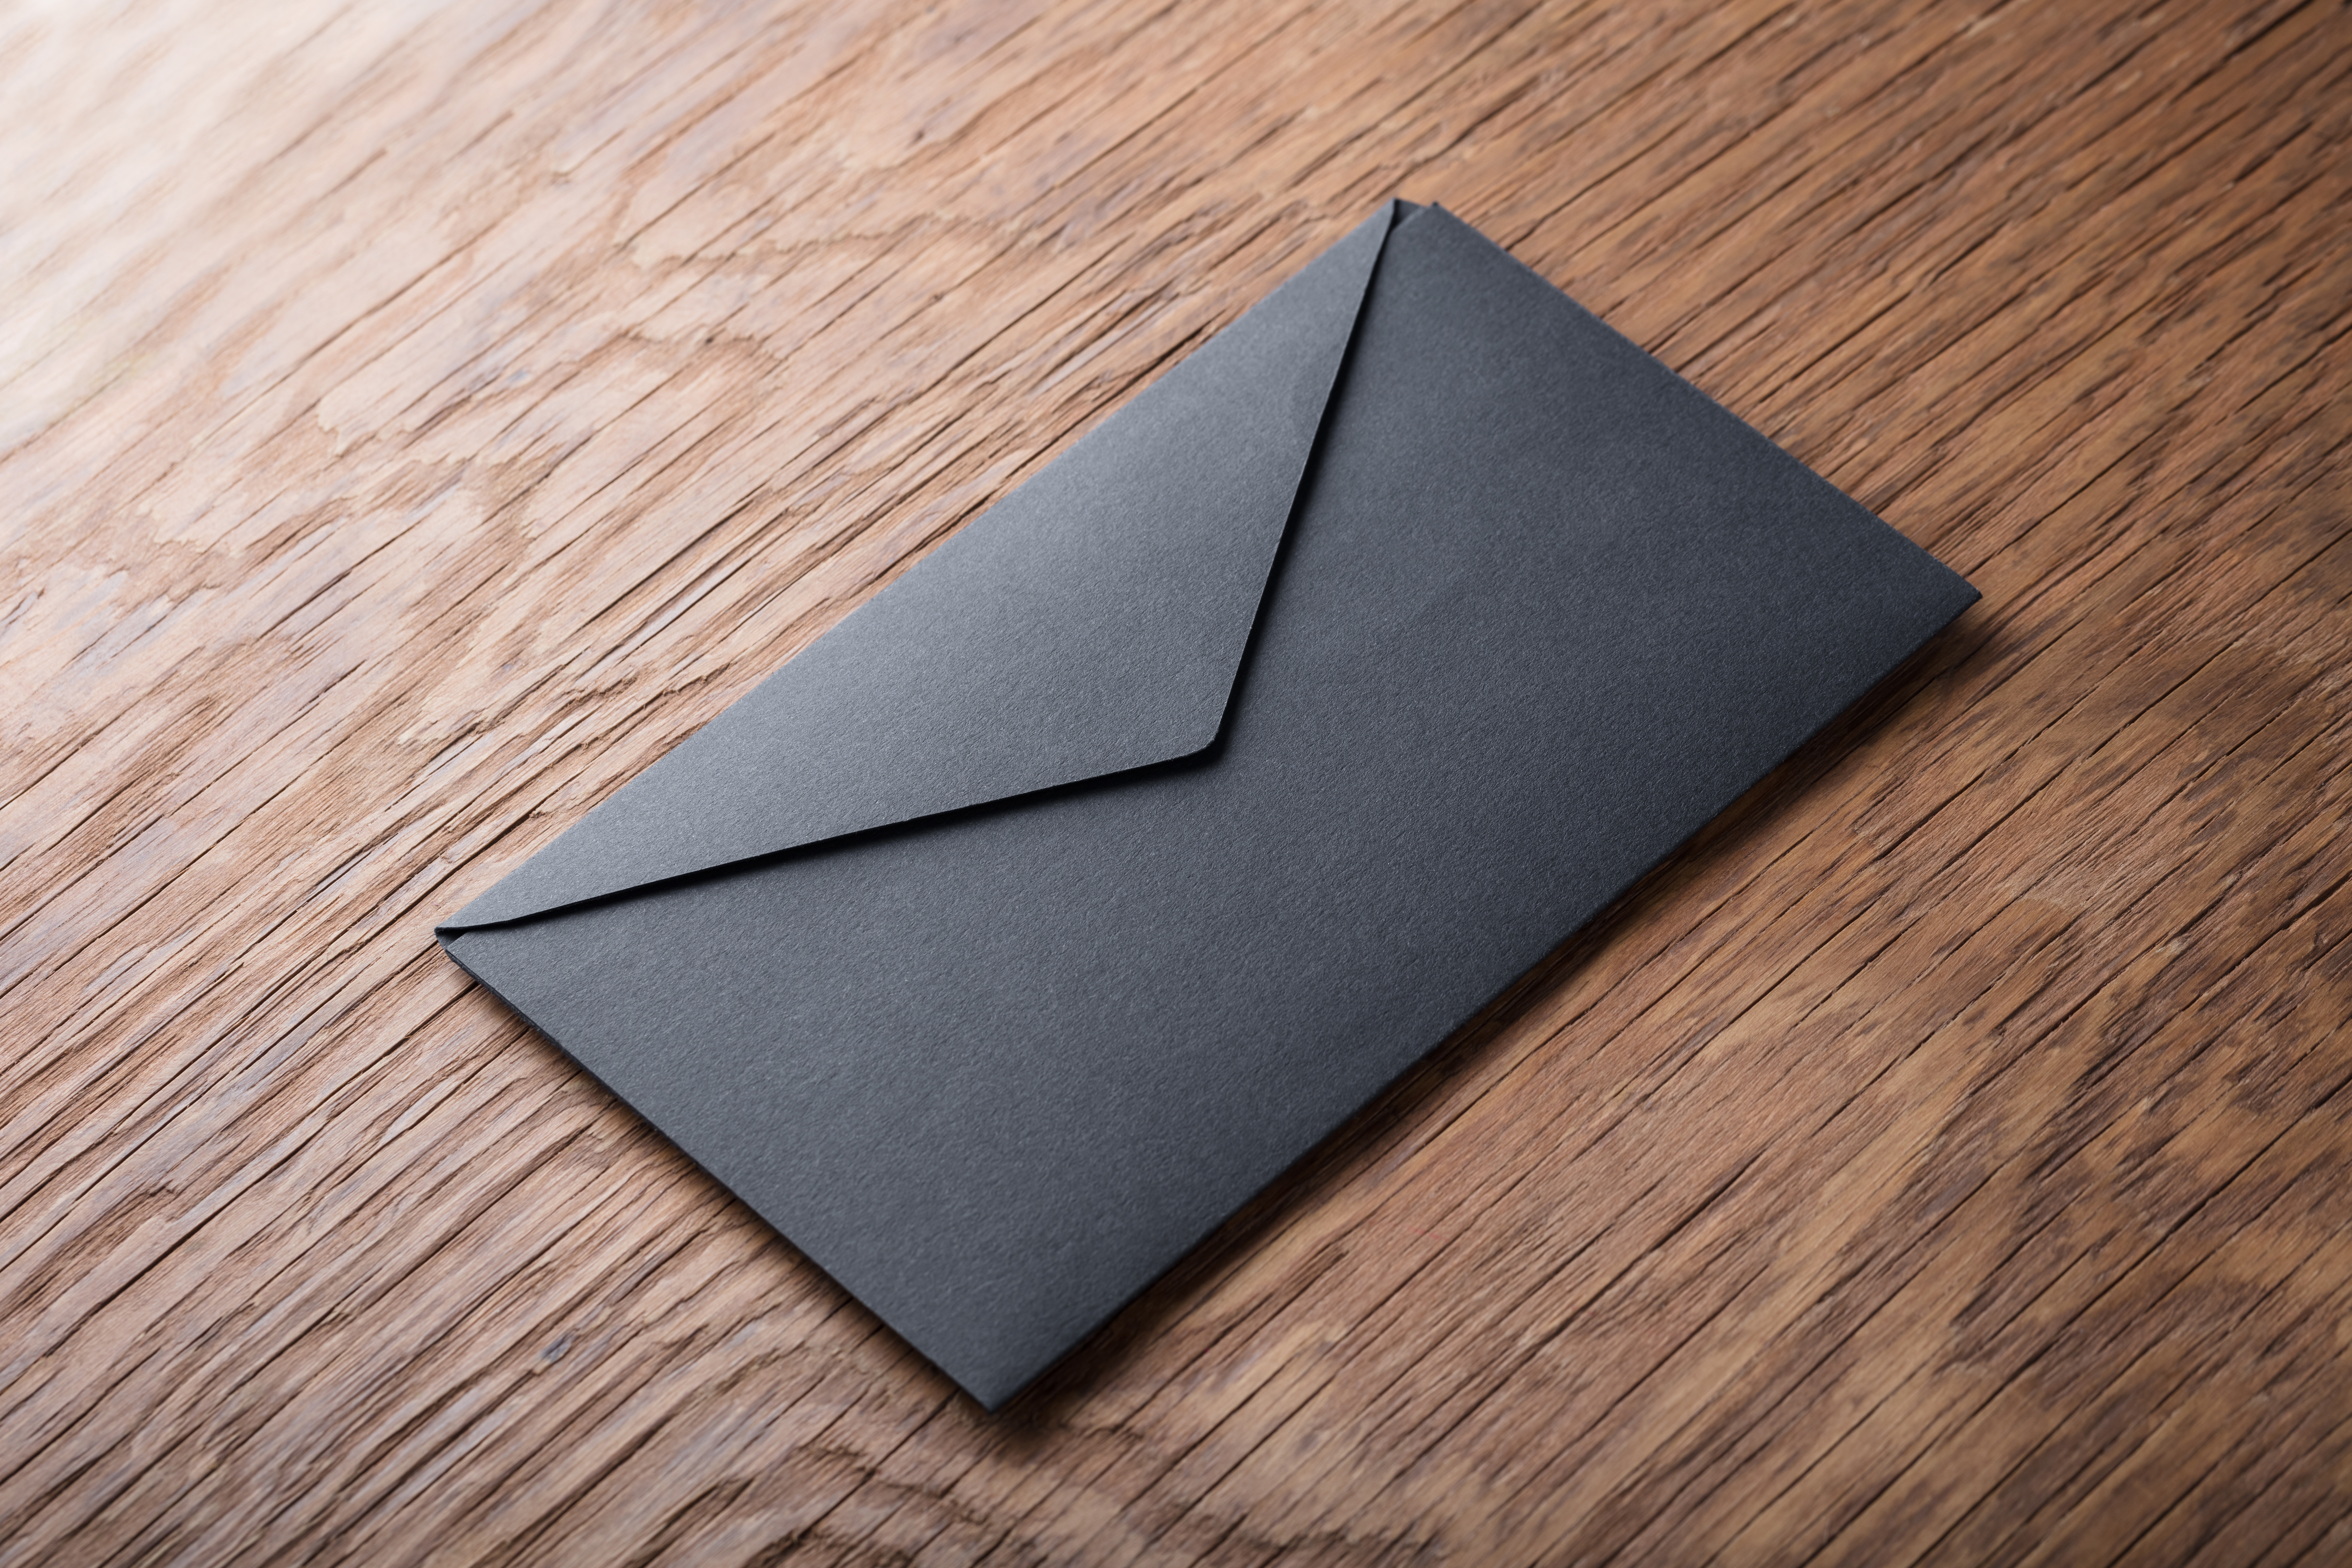 Black envelope on wooden table | Source: Shutterstock